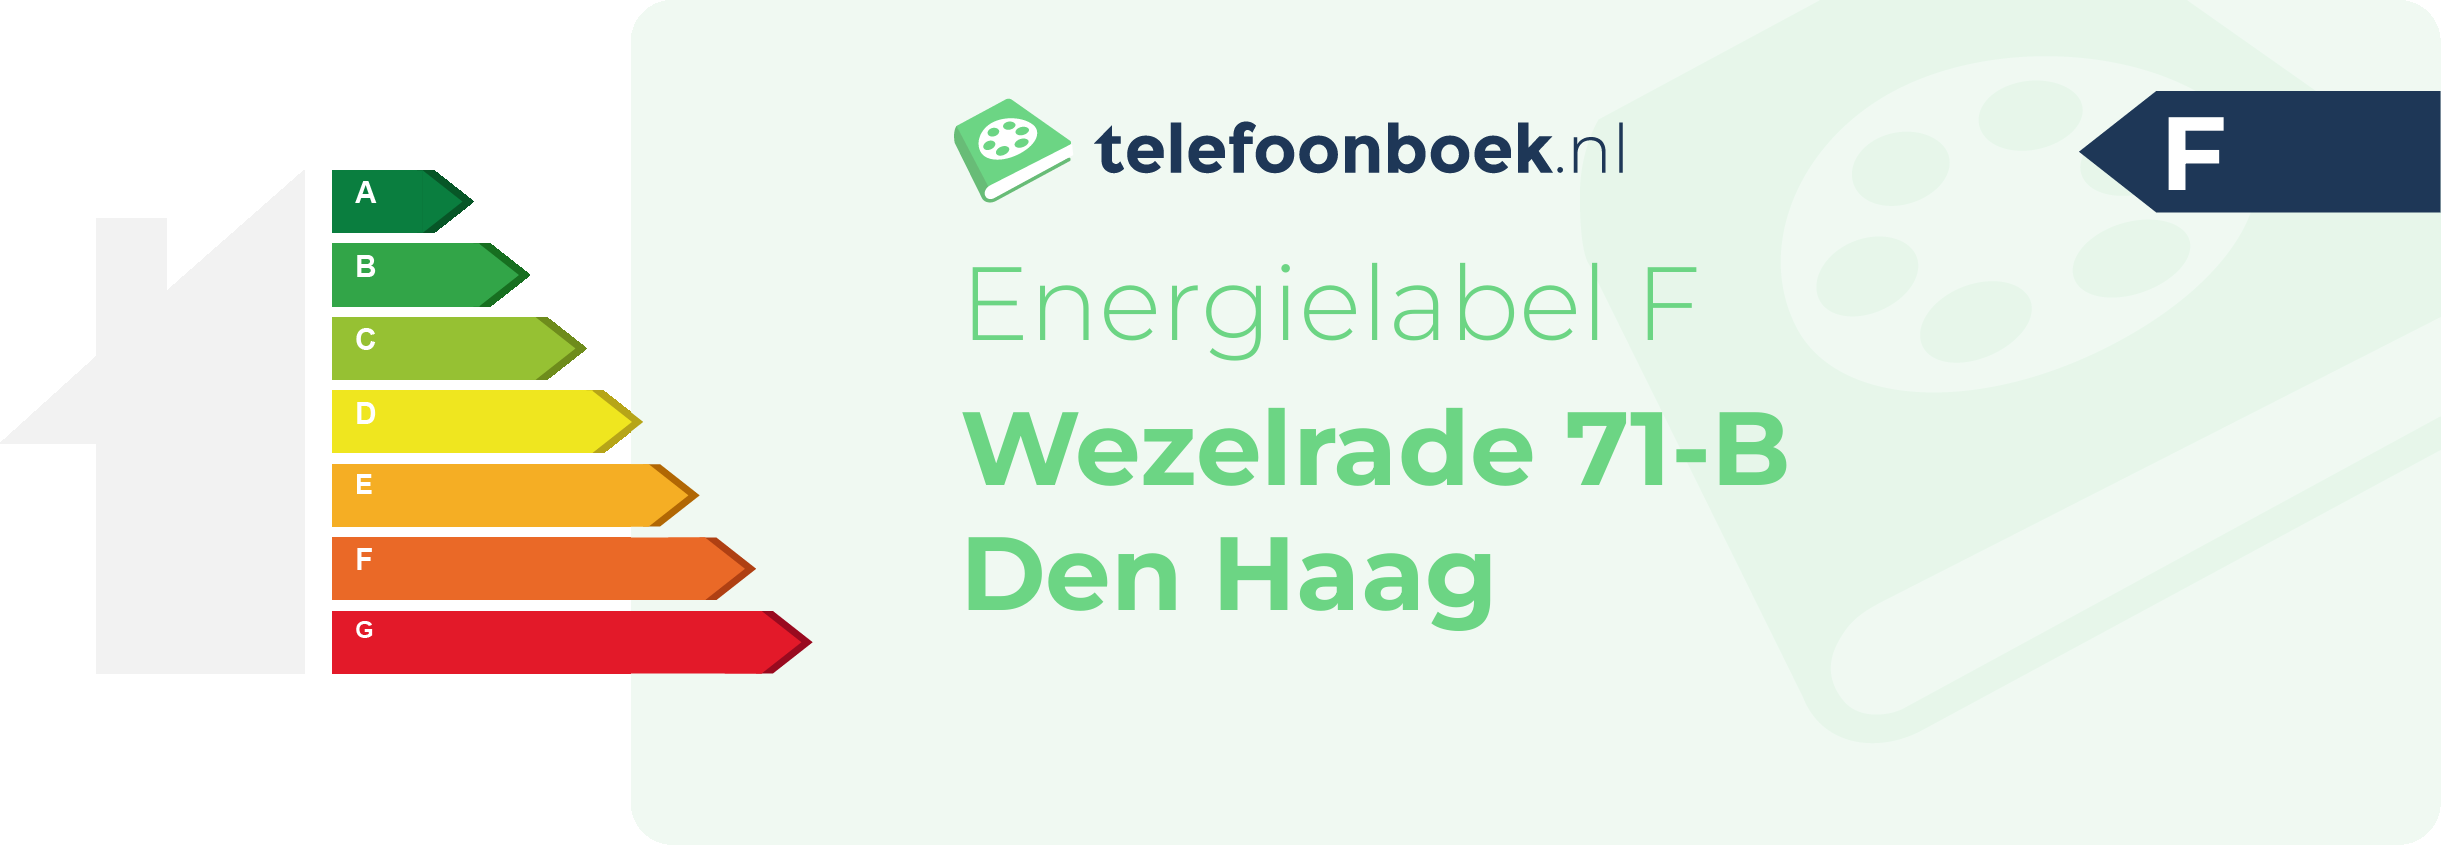 Energielabel Wezelrade 71-B Den Haag